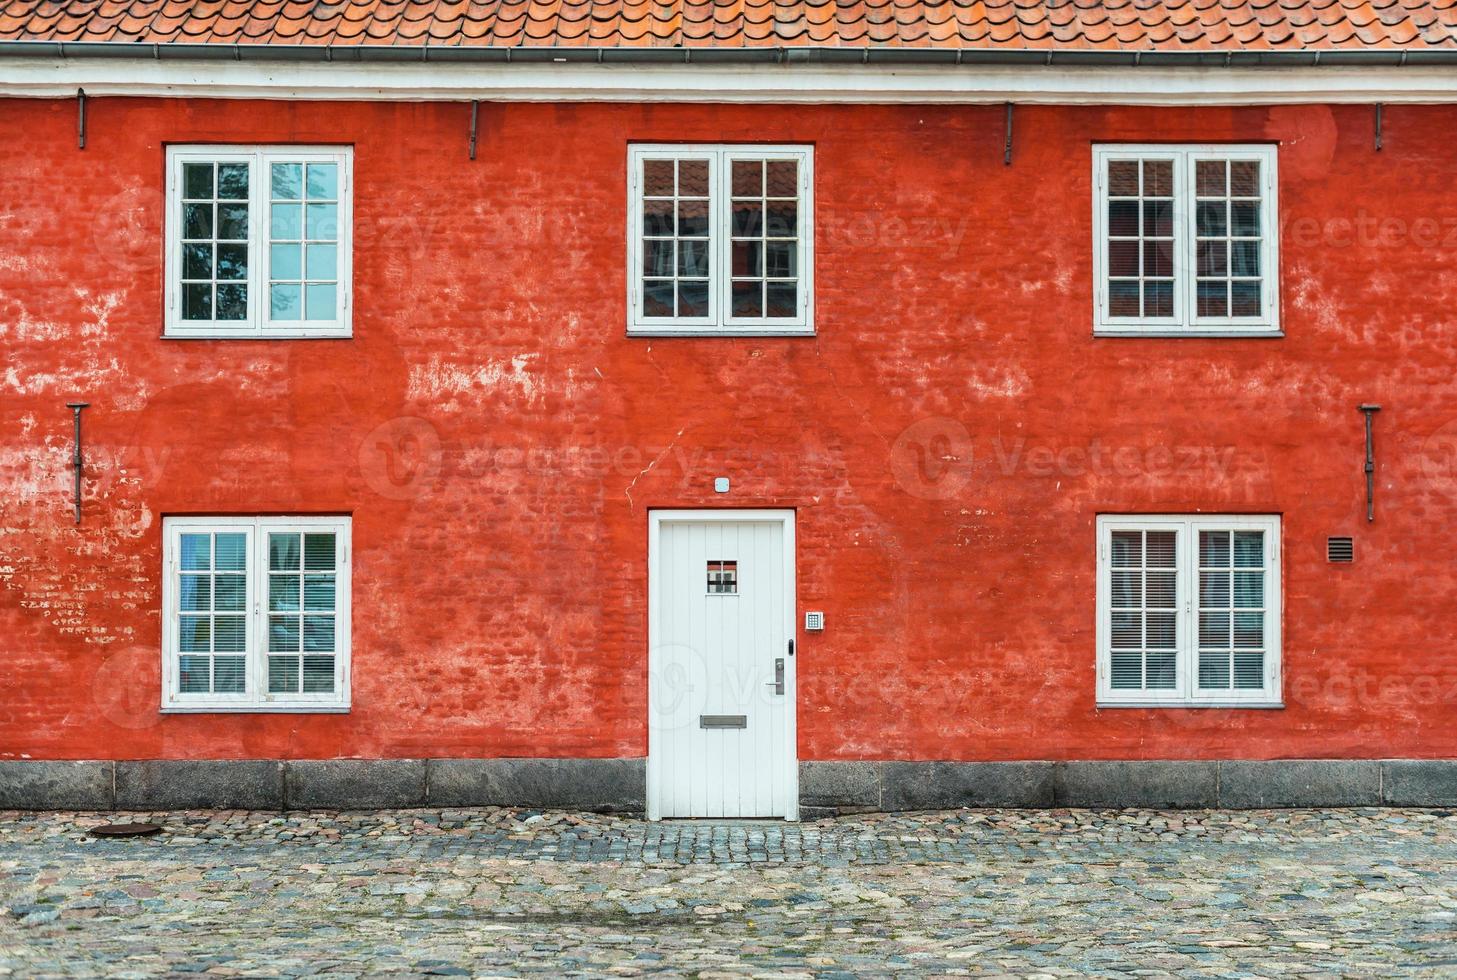 velha casa vermelha com portas e janelas brancas, kastellet, copenhagen, dinamarca foto